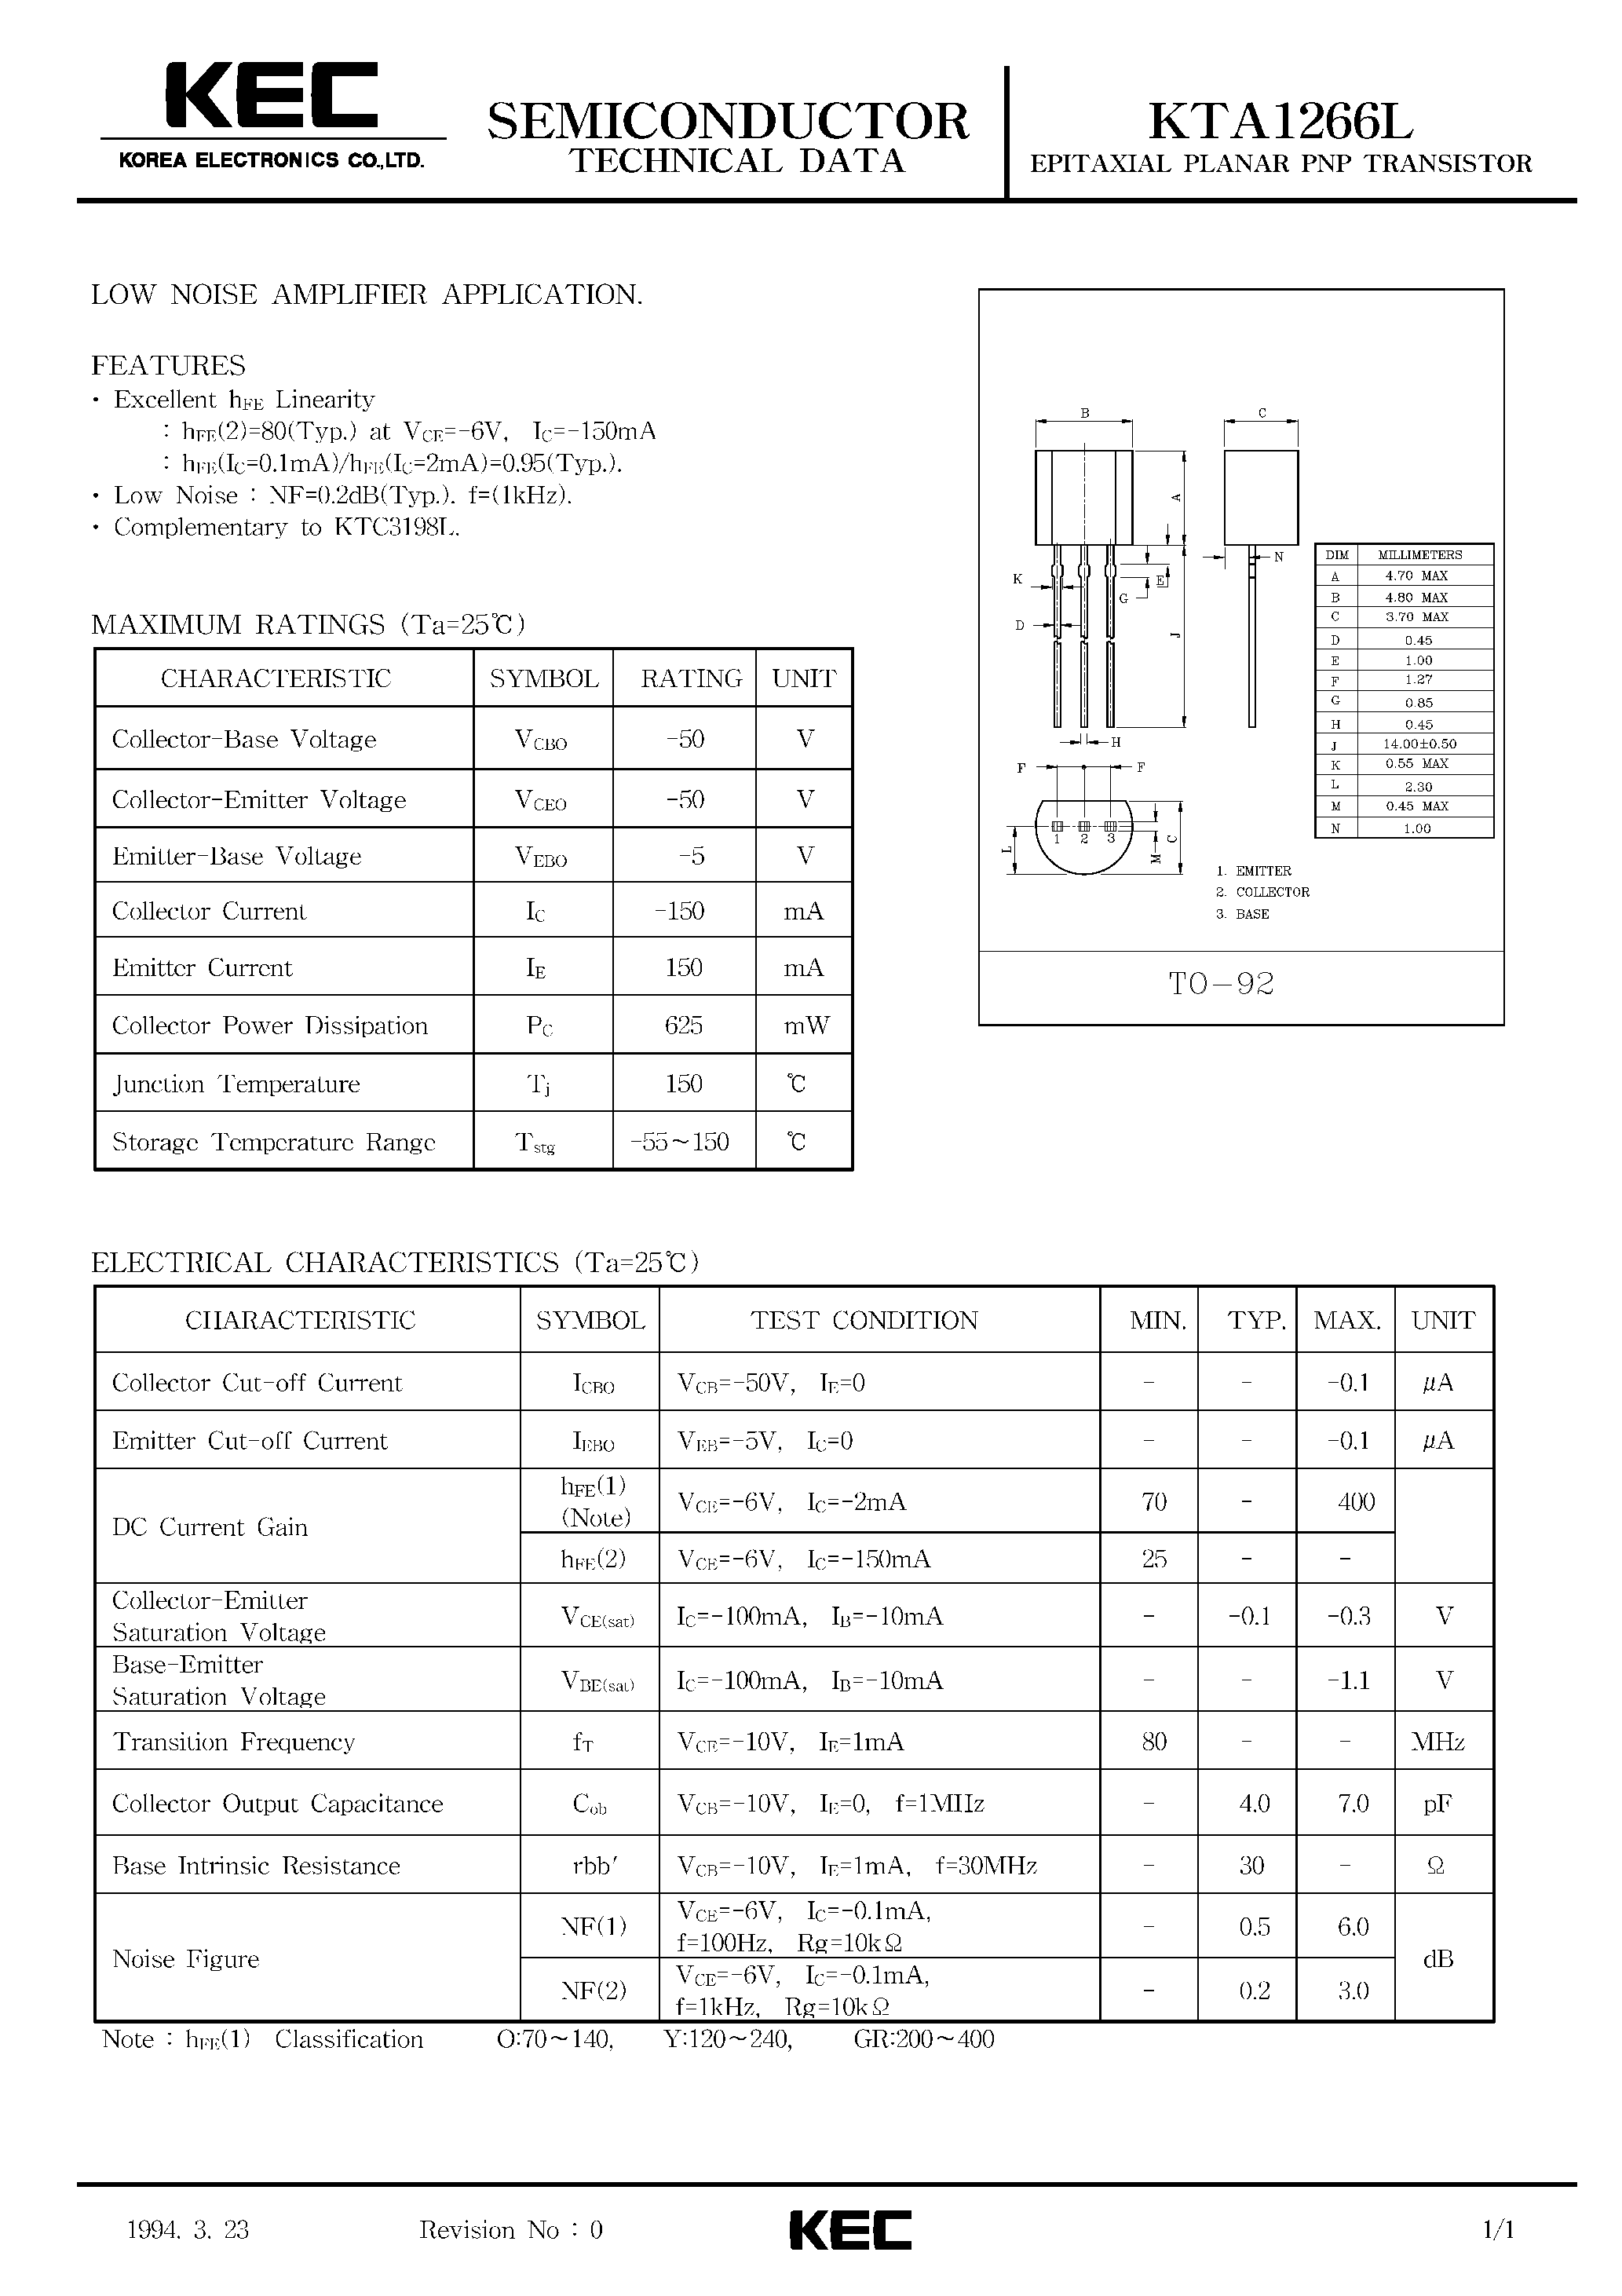 Datasheet KTA1266L - EPITAXIAL PLANAR PNP TRANSISTOR (LOW NOISE AMPLIFIER) page 1